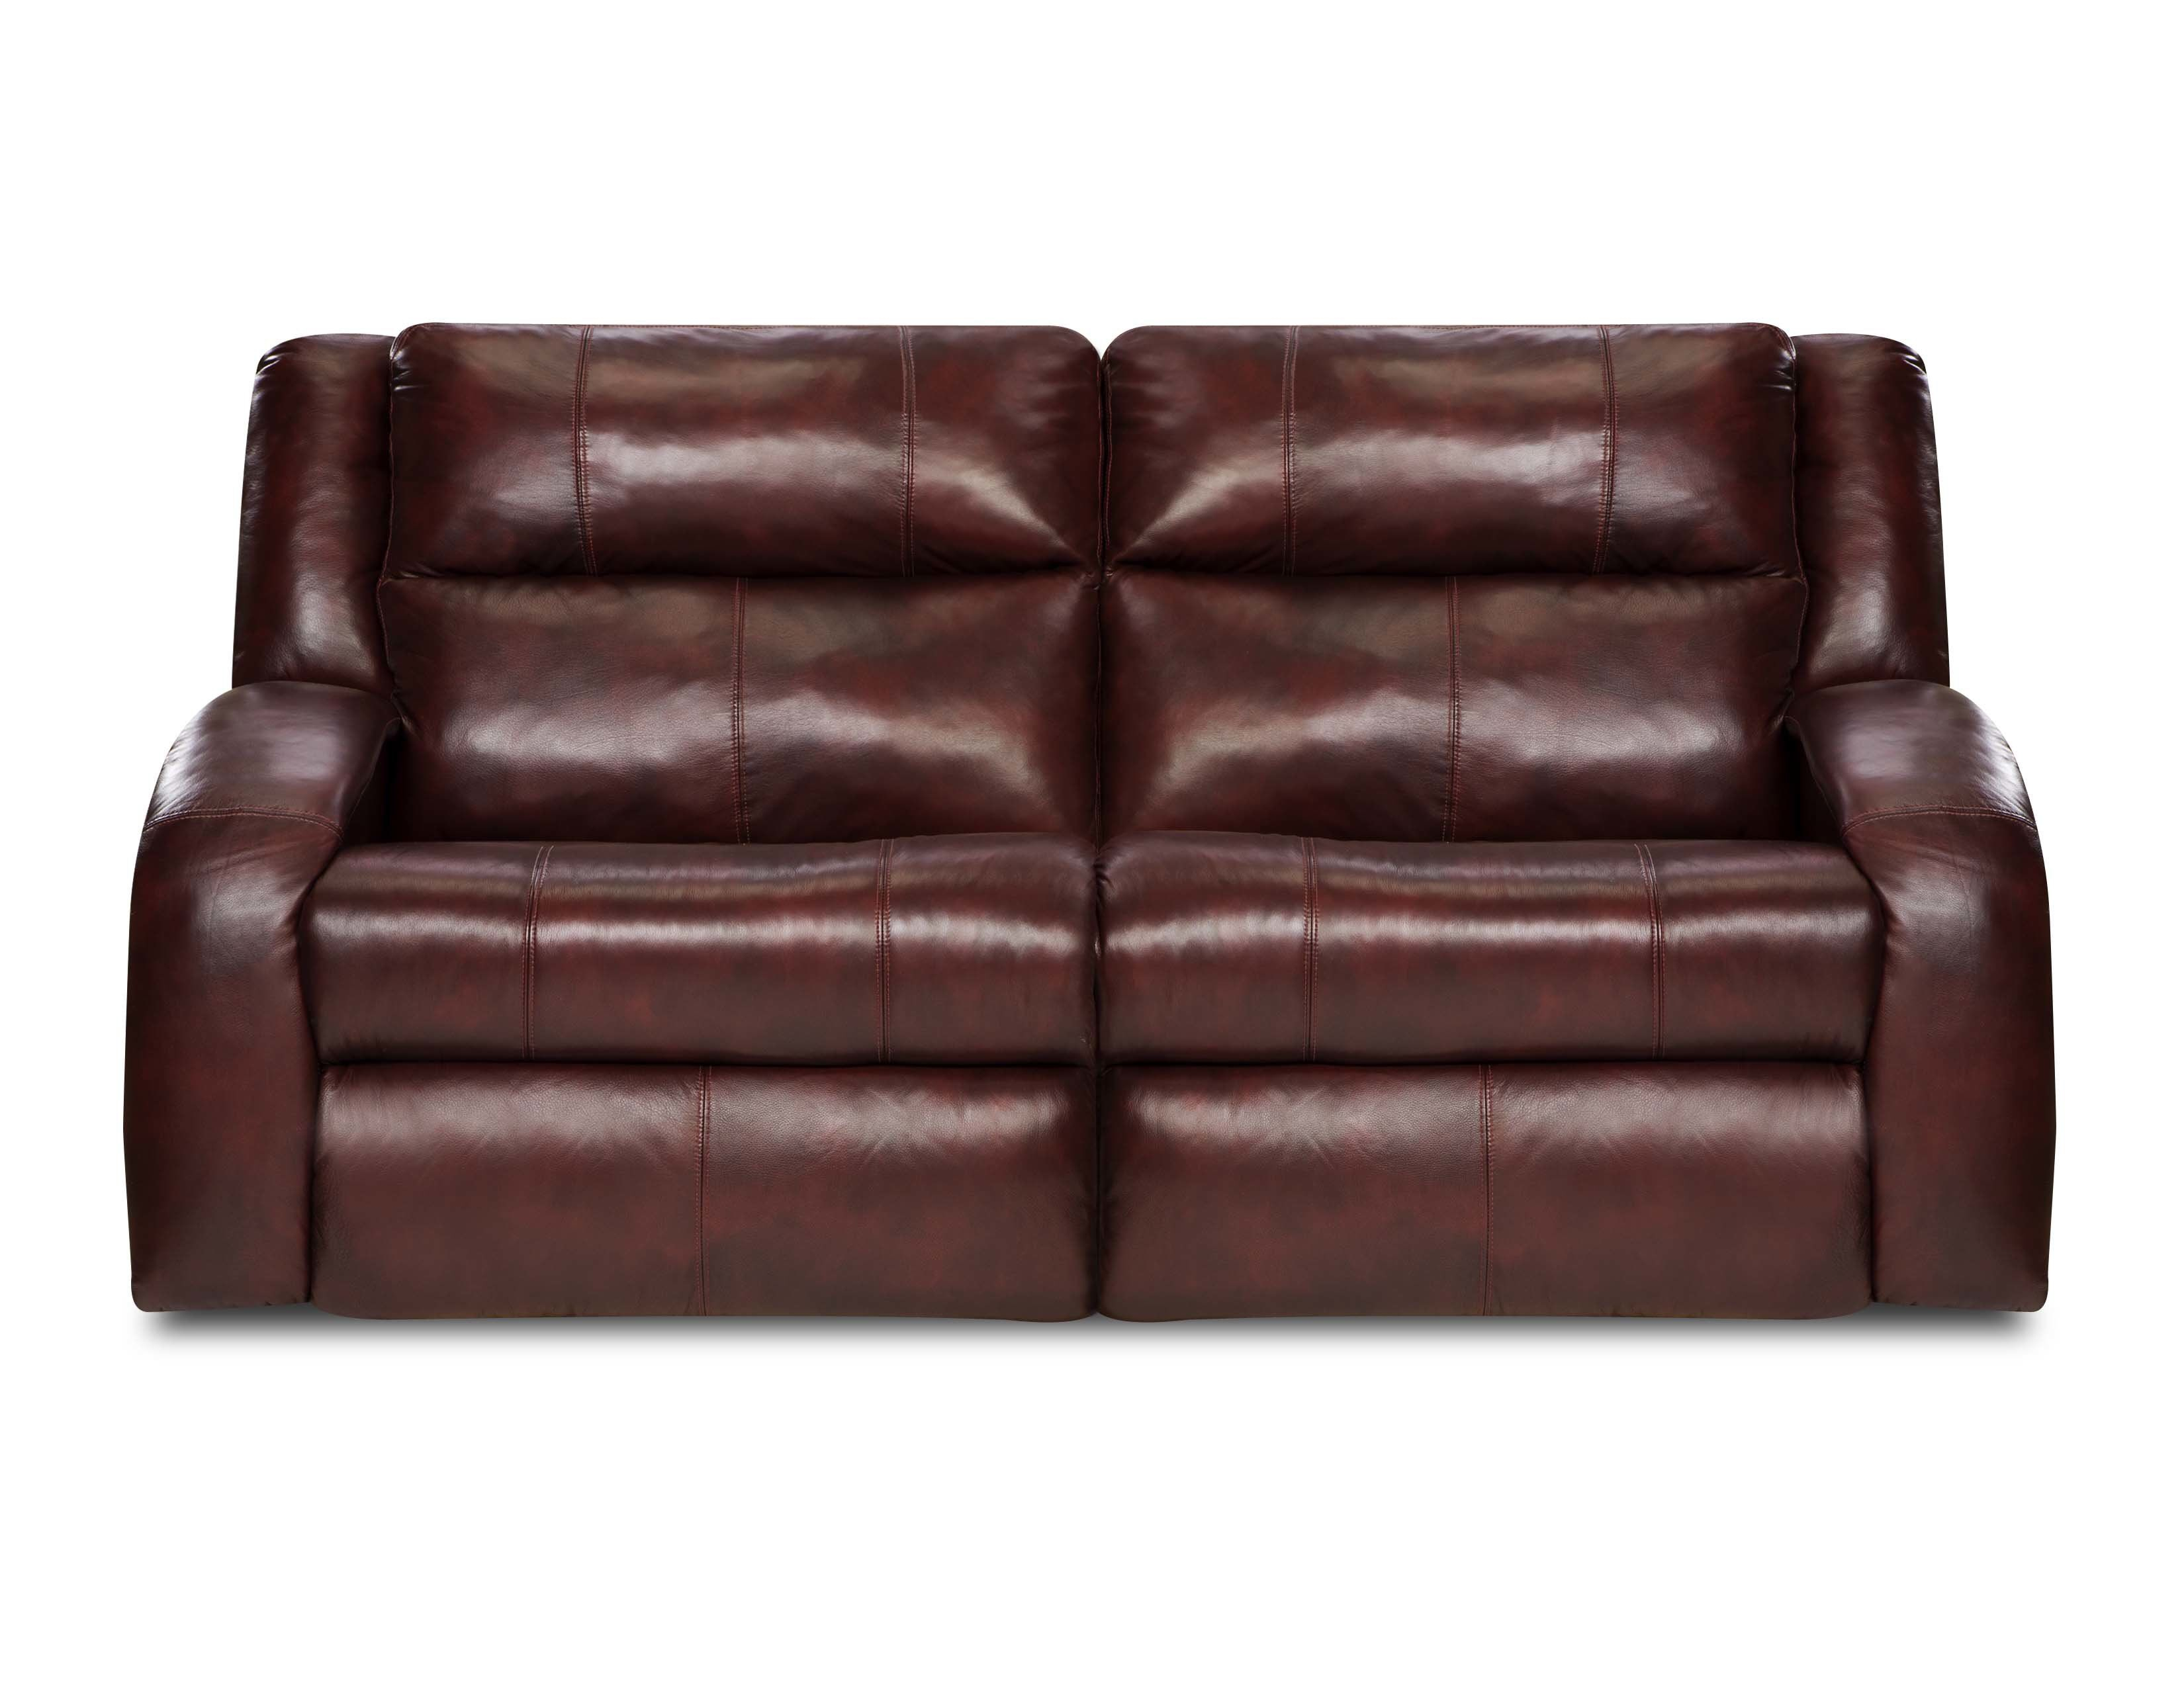 maverick dual reclining leather sofa